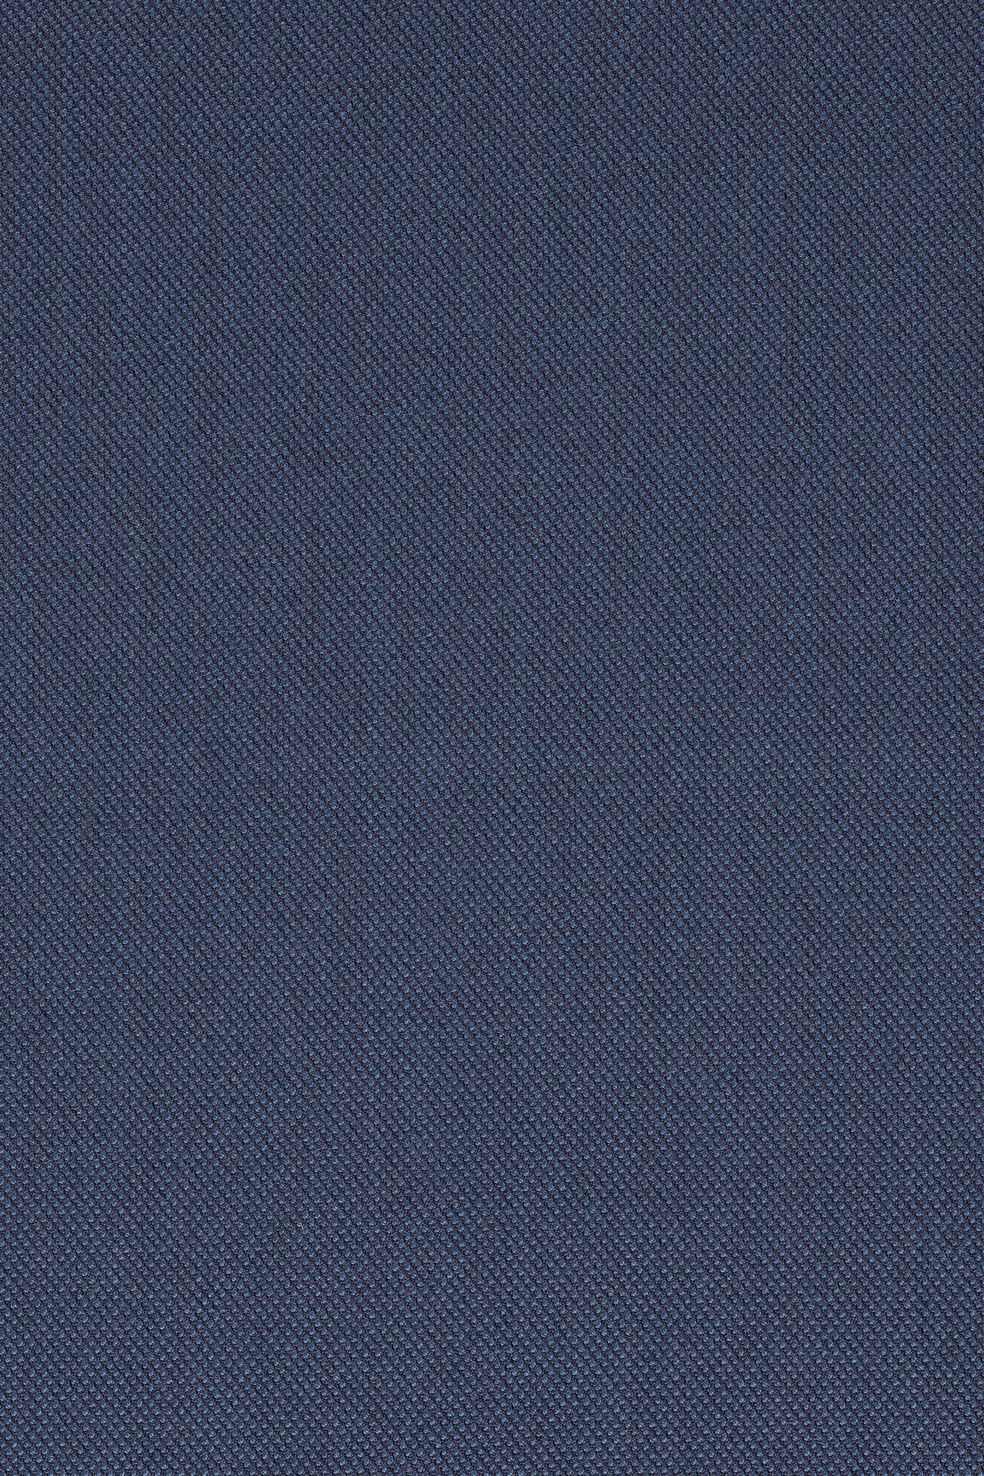 Fabric sample Steelcut Trio 3 796 blue